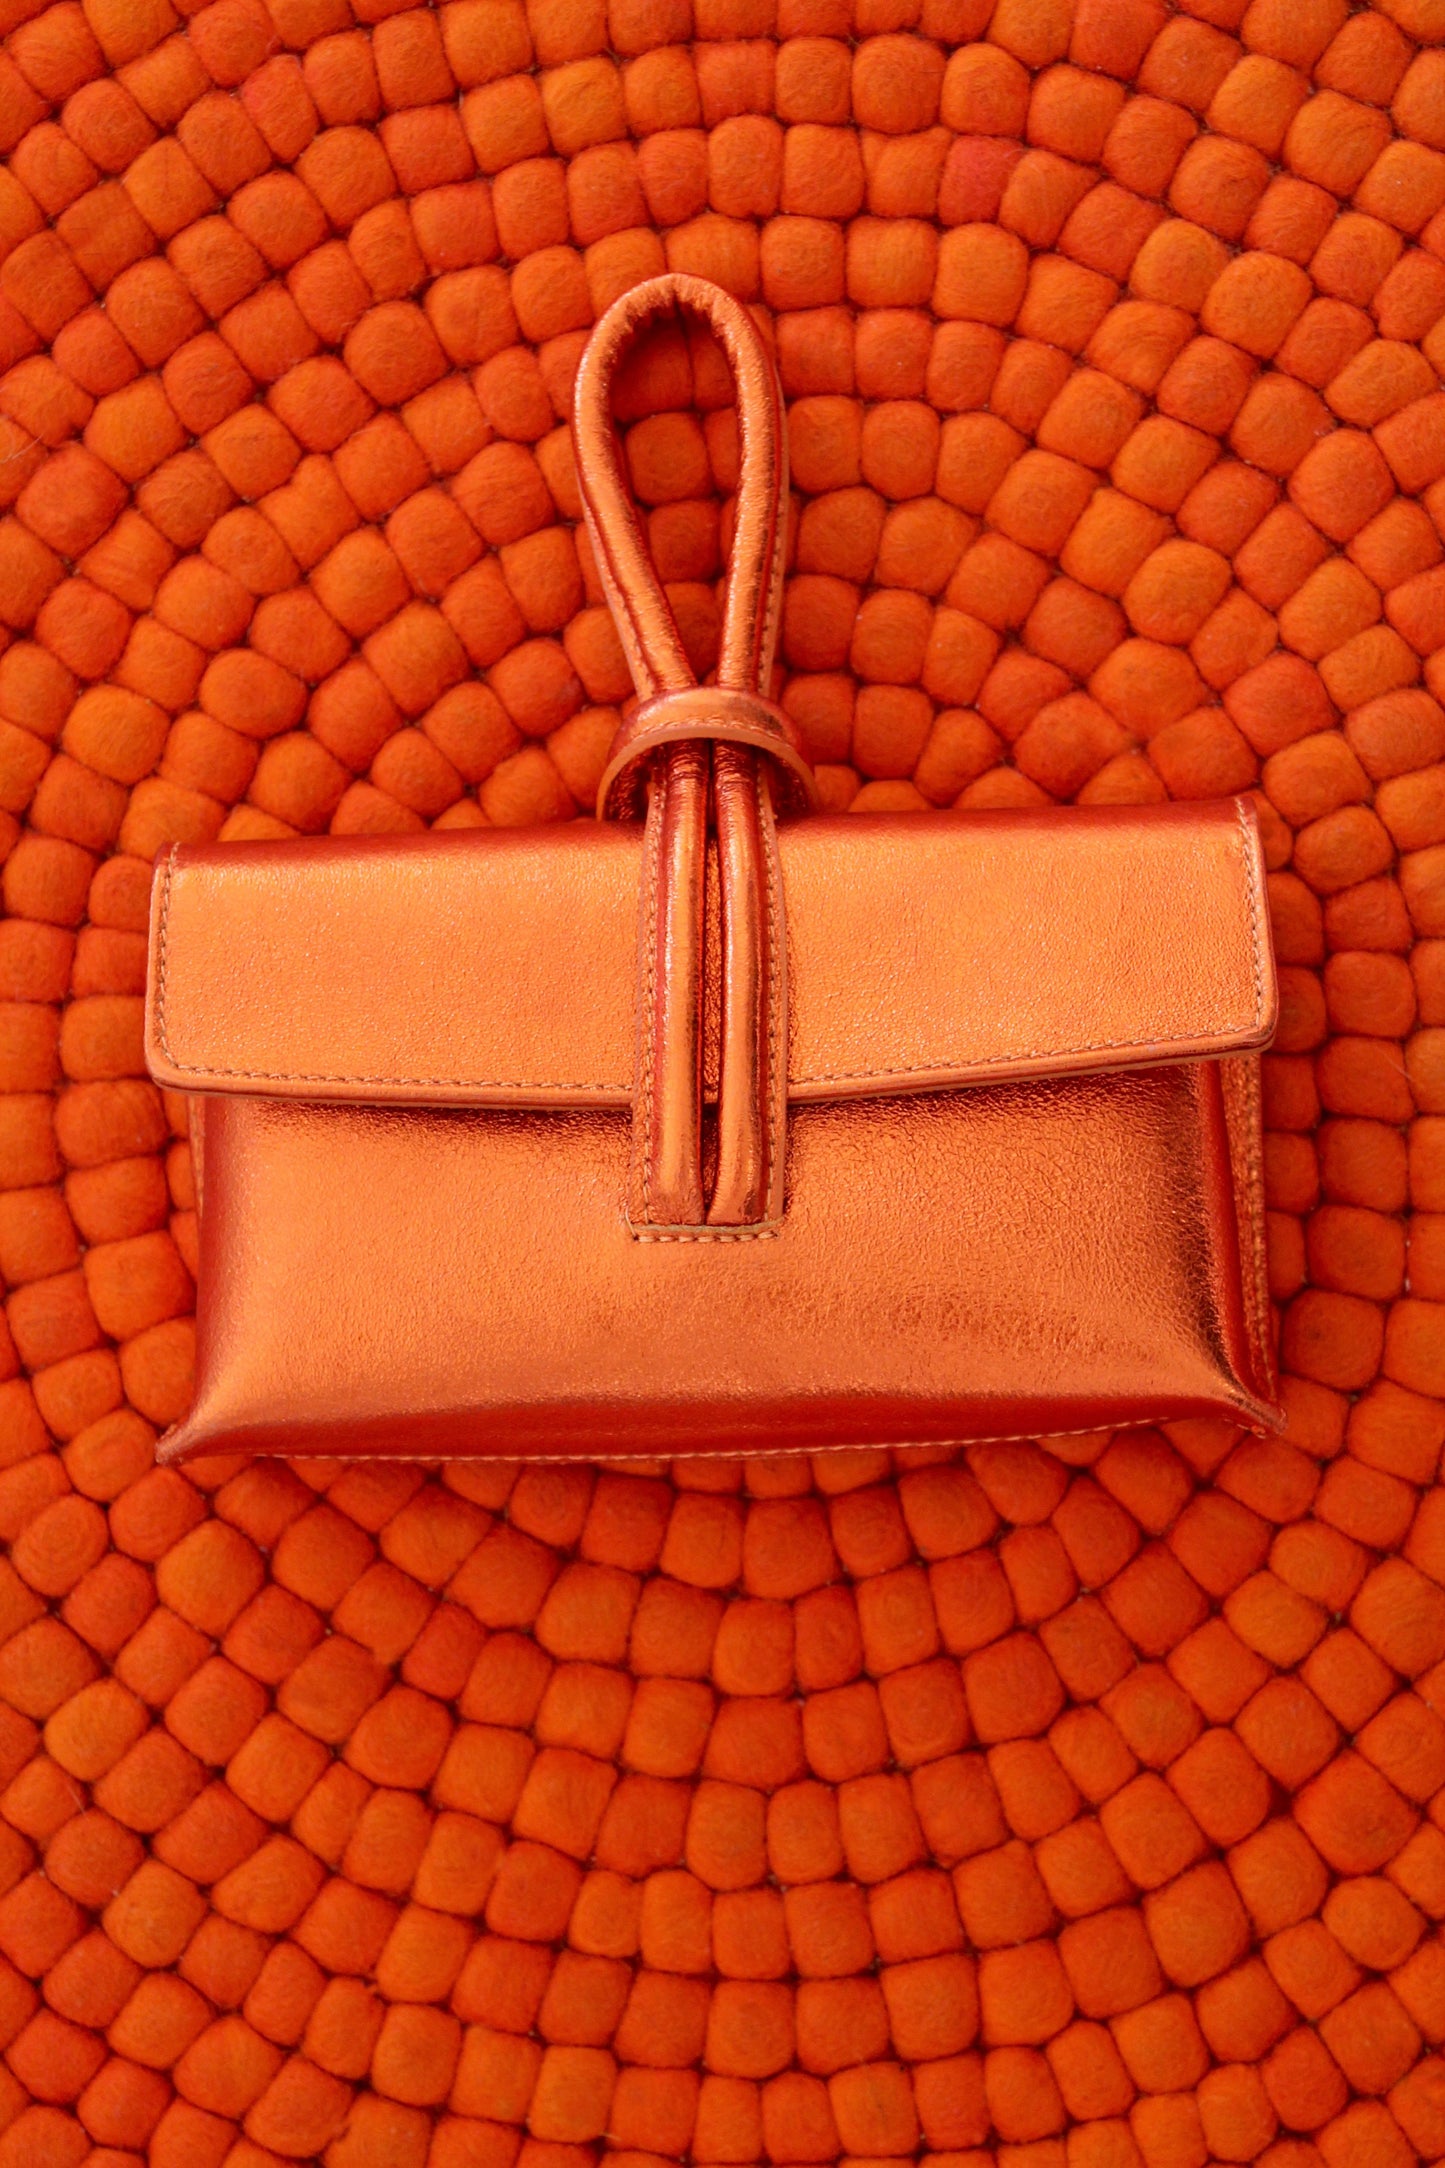 Orange Shiny Bag